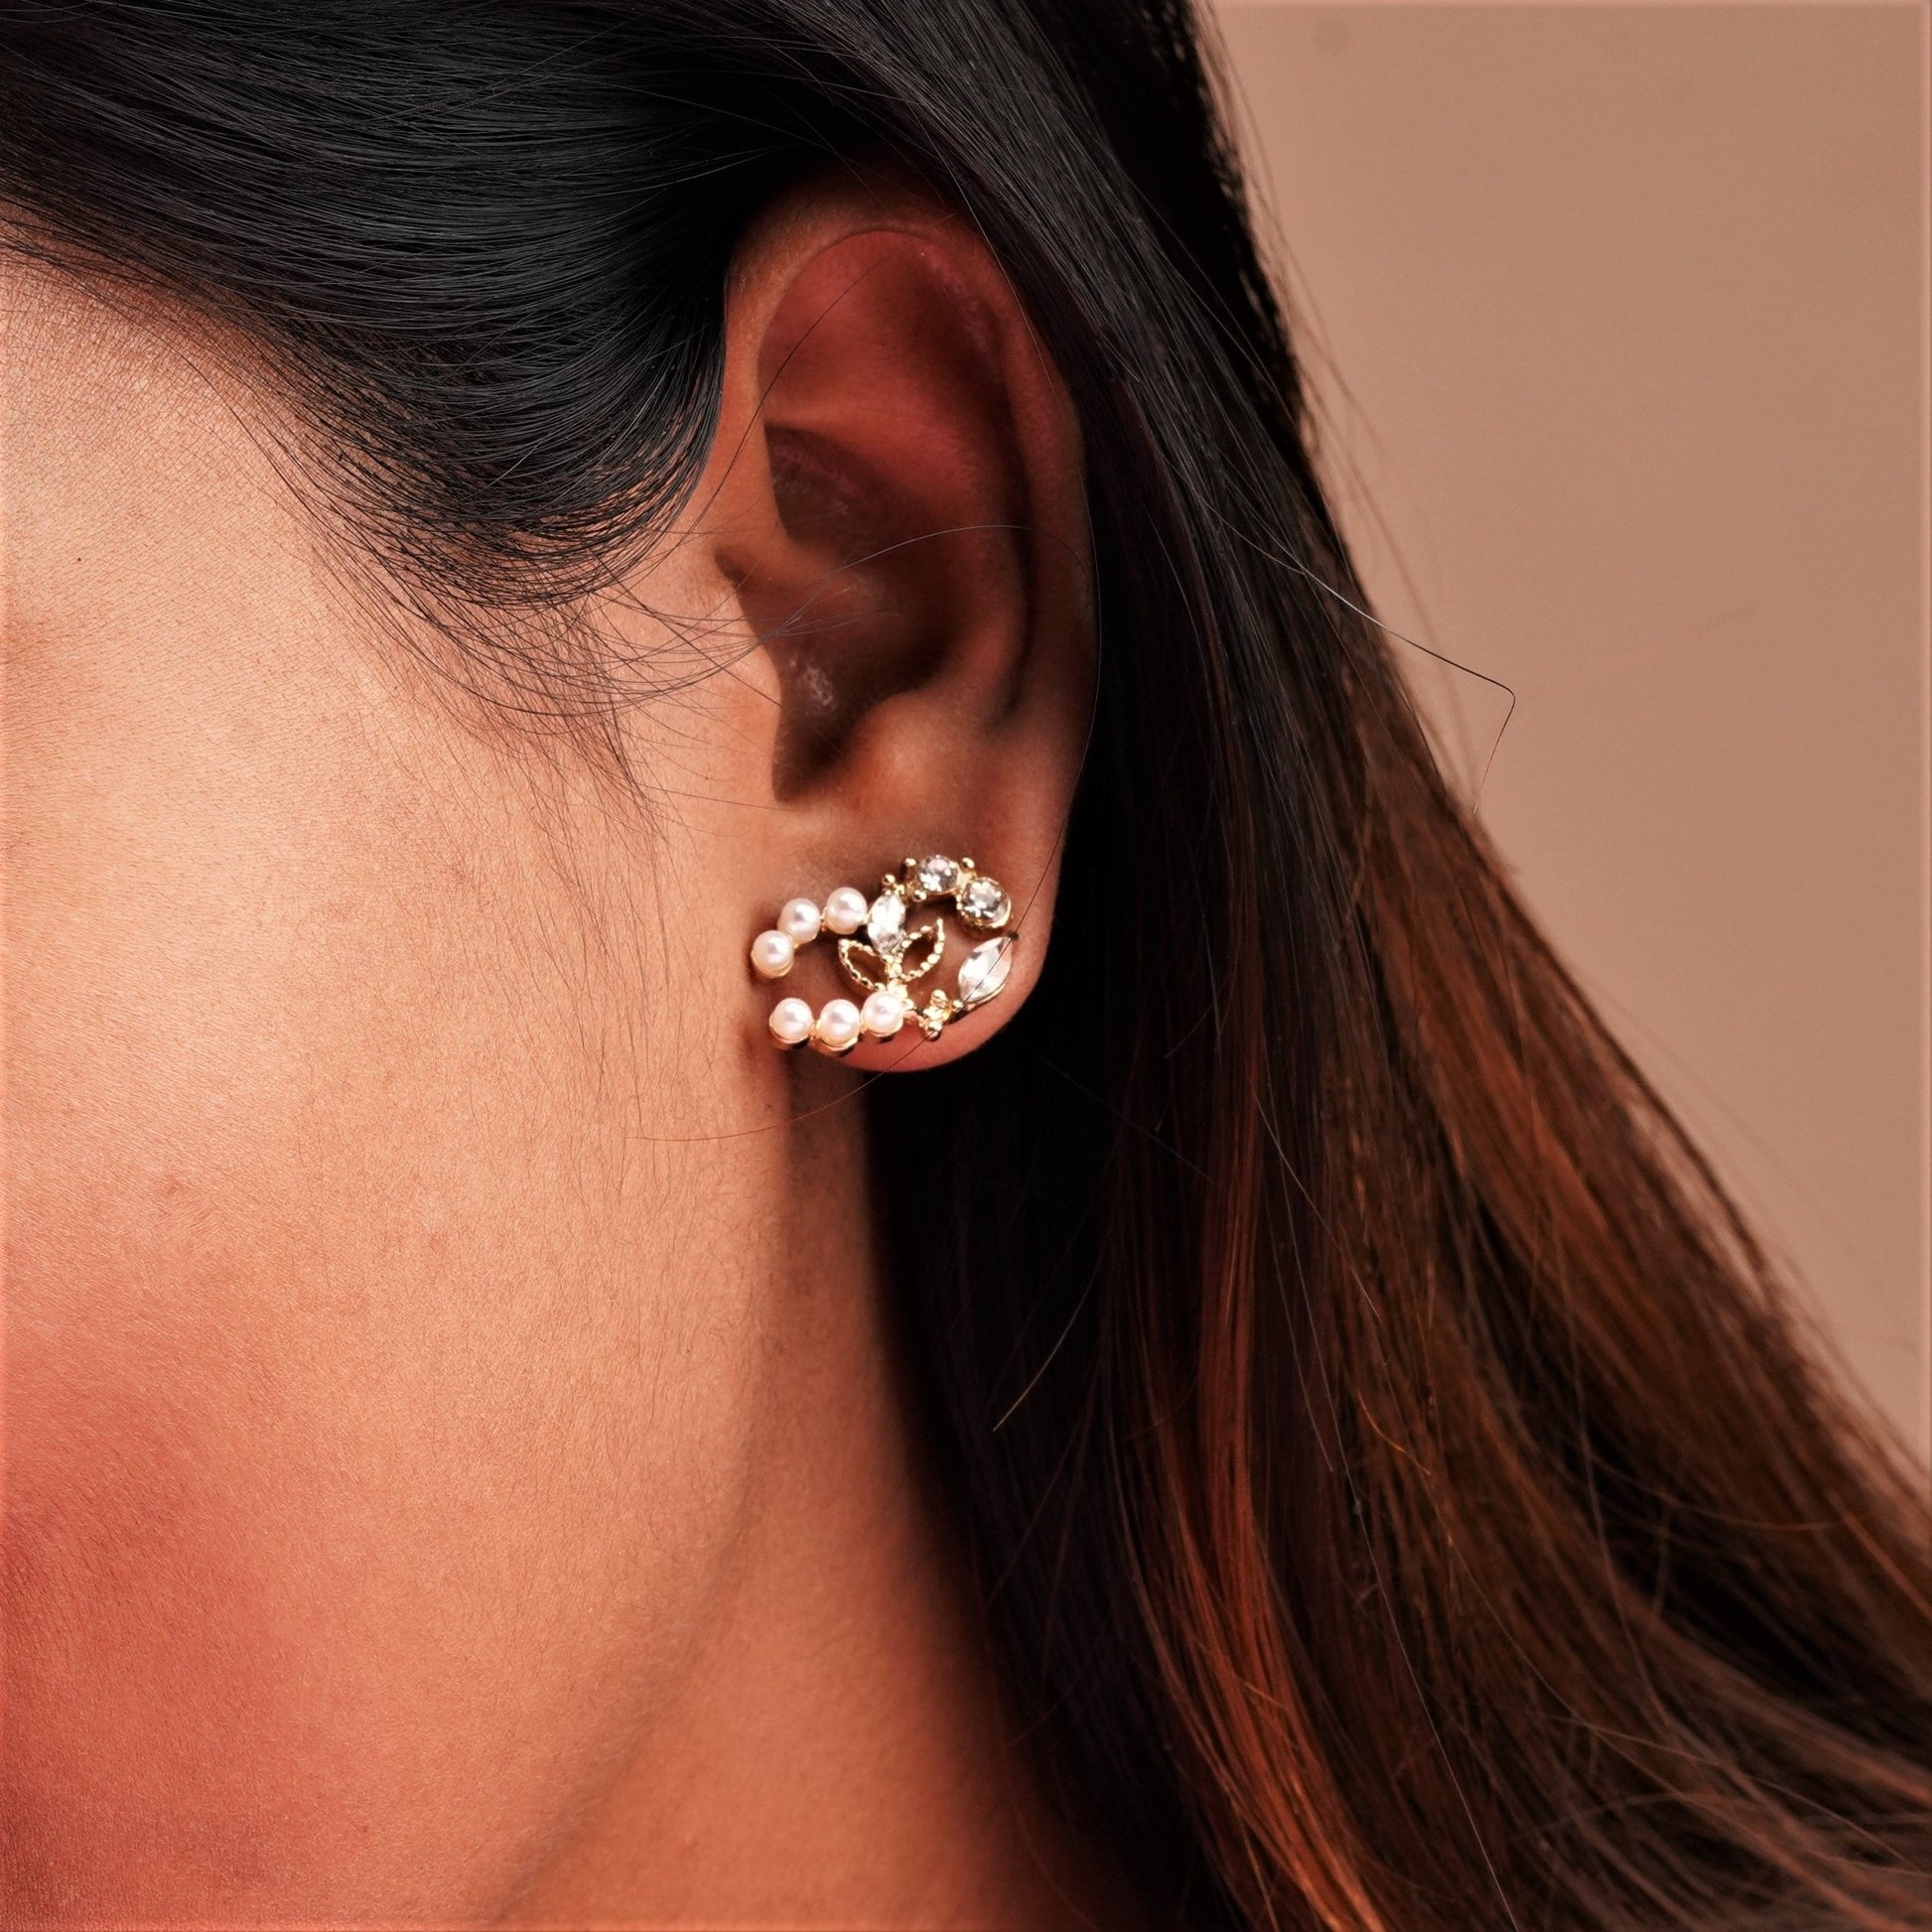 A pearl beaded earring on a girl's ear